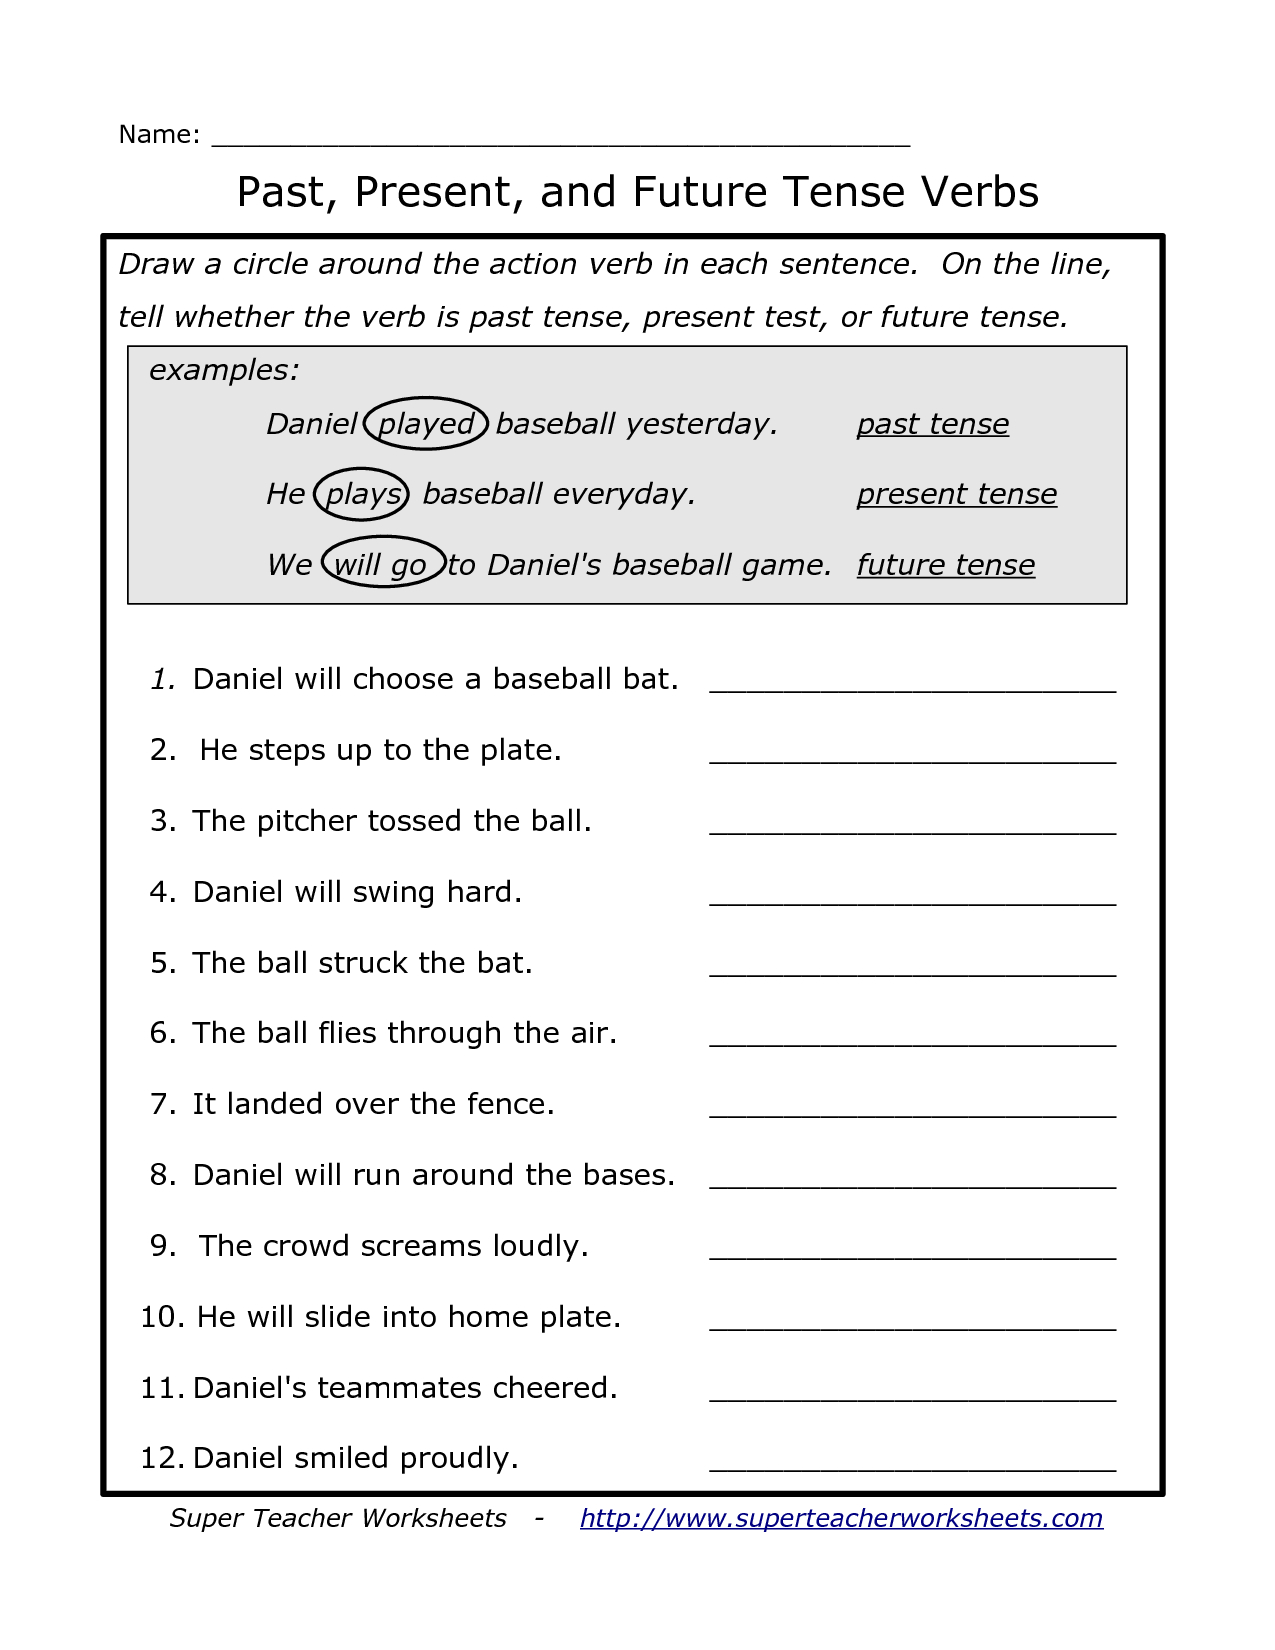 Past Present And Future Tense Verbs | Worksheets | Gramática Del - Free Printable Past Tense Verbs Worksheets